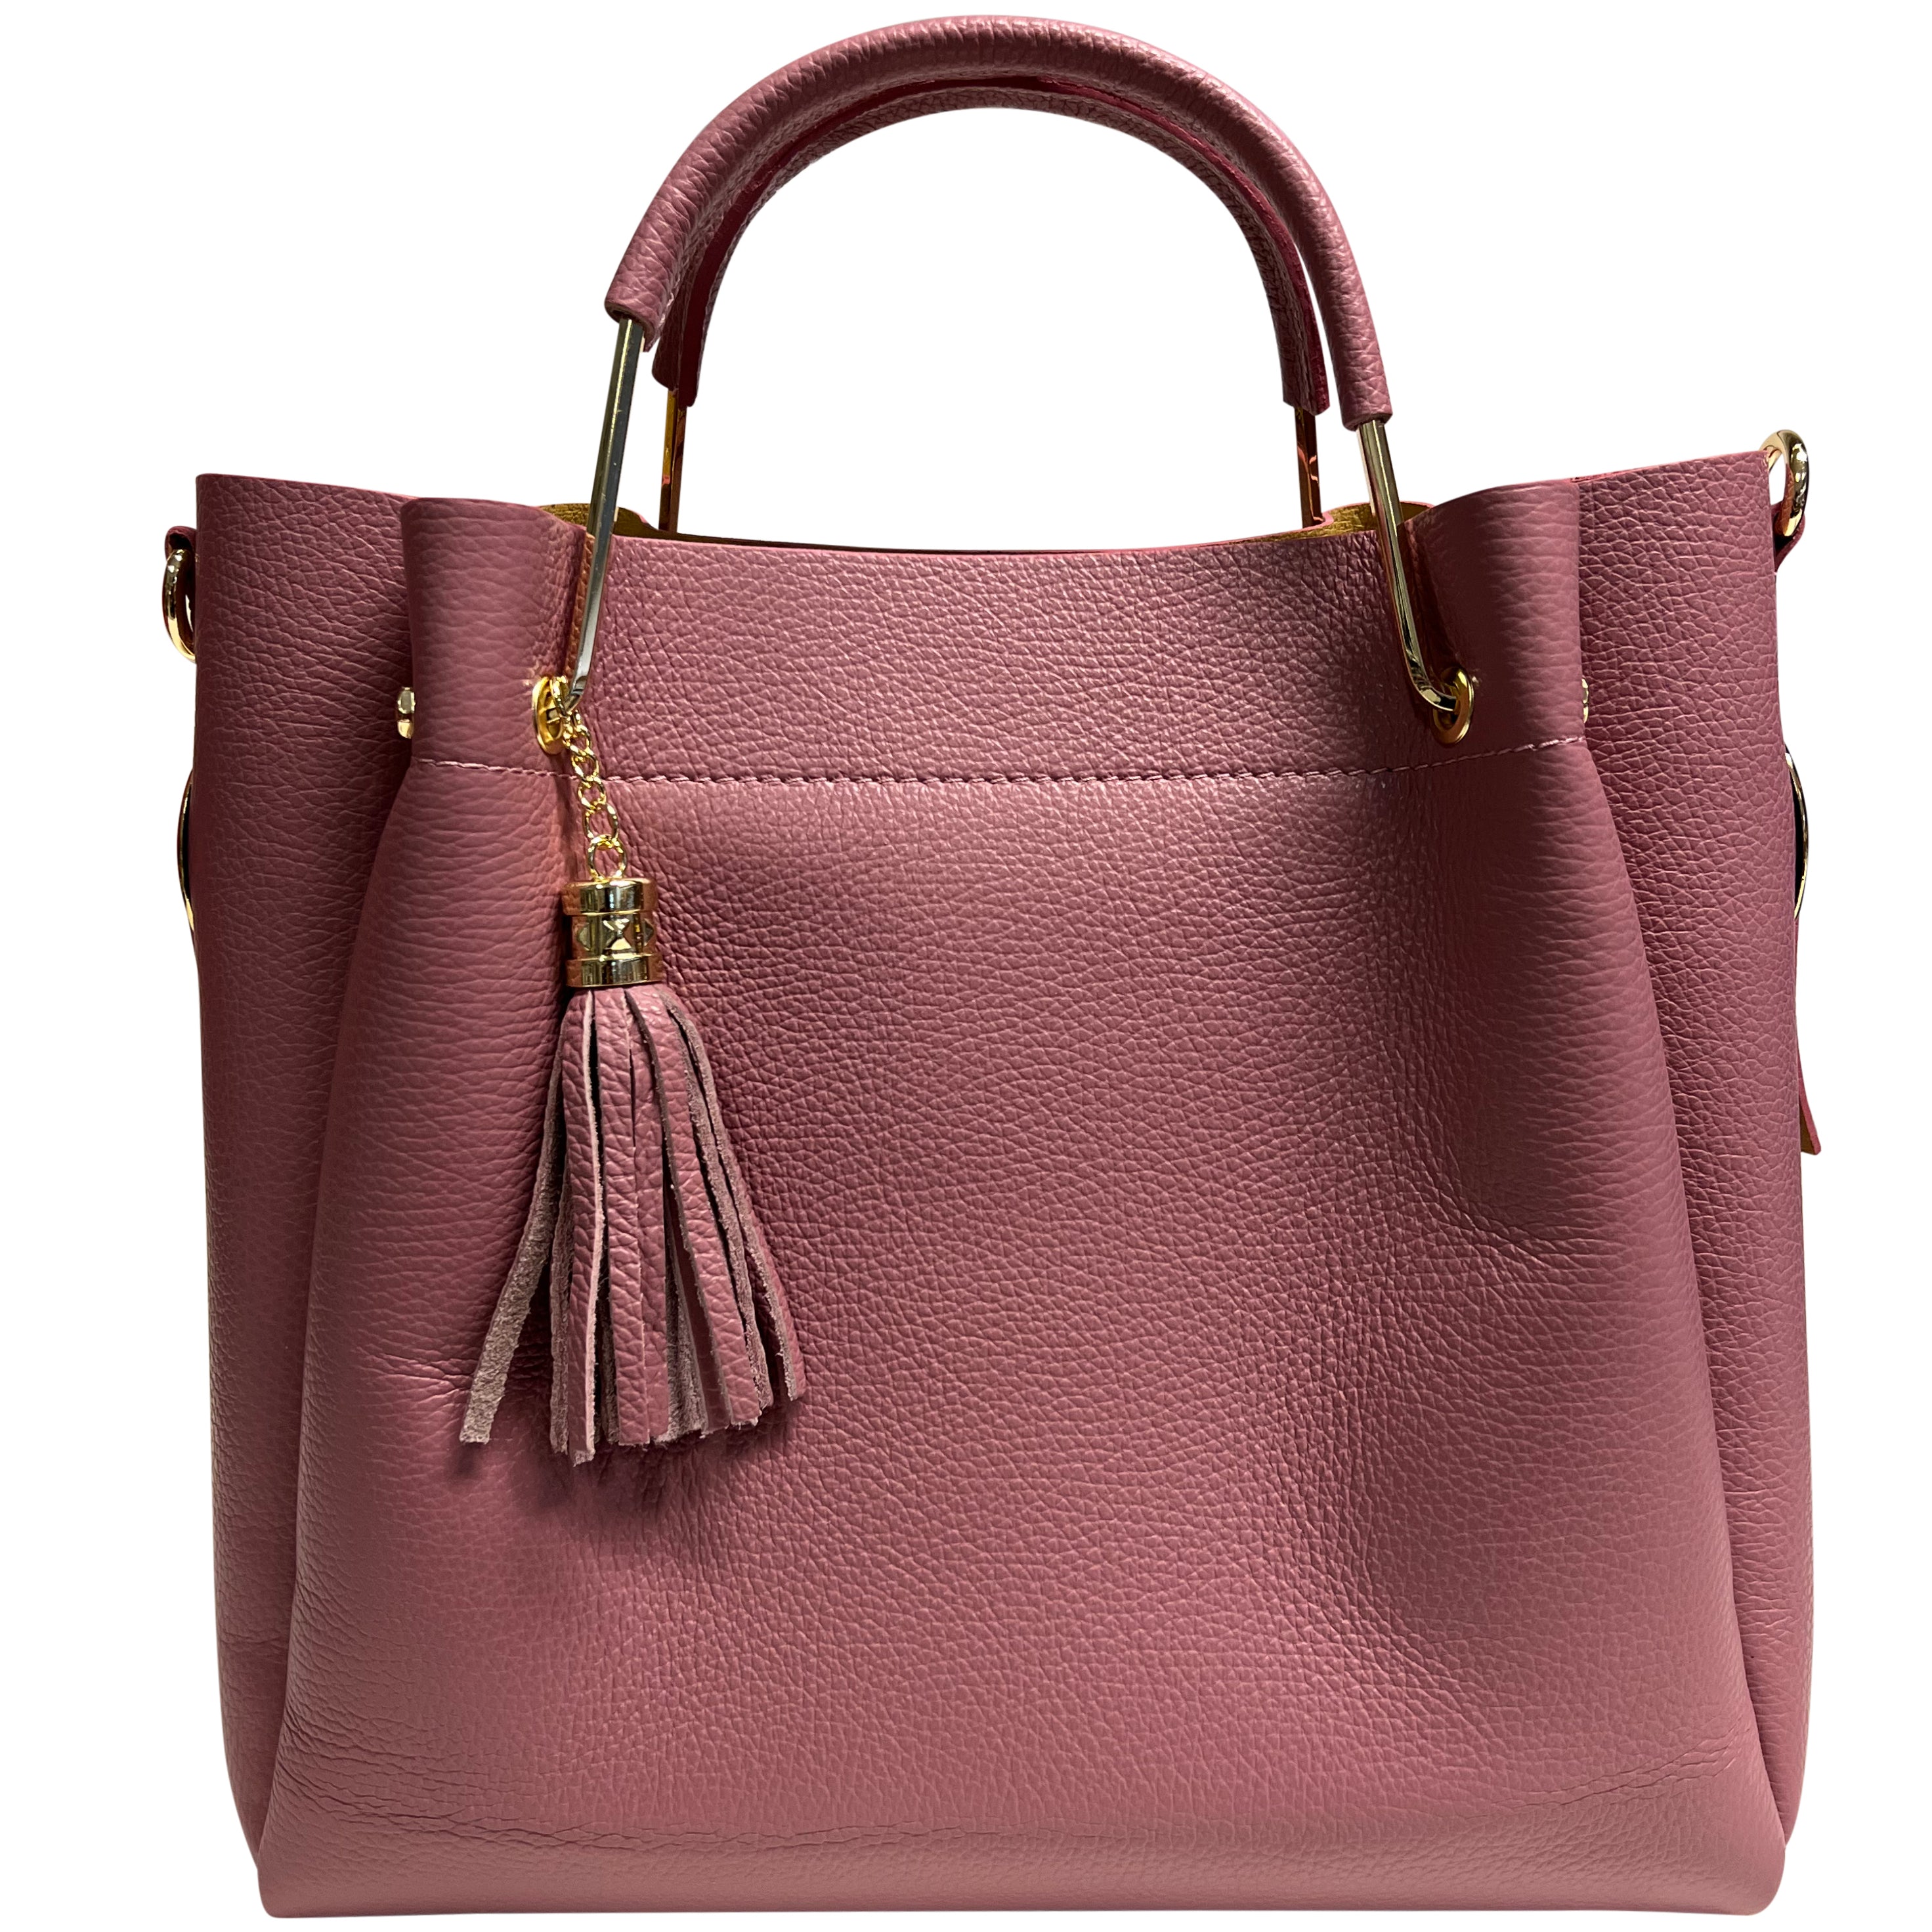 Modarno Woman Bucket Bag in Genuine Leather + Fiona model inner bag